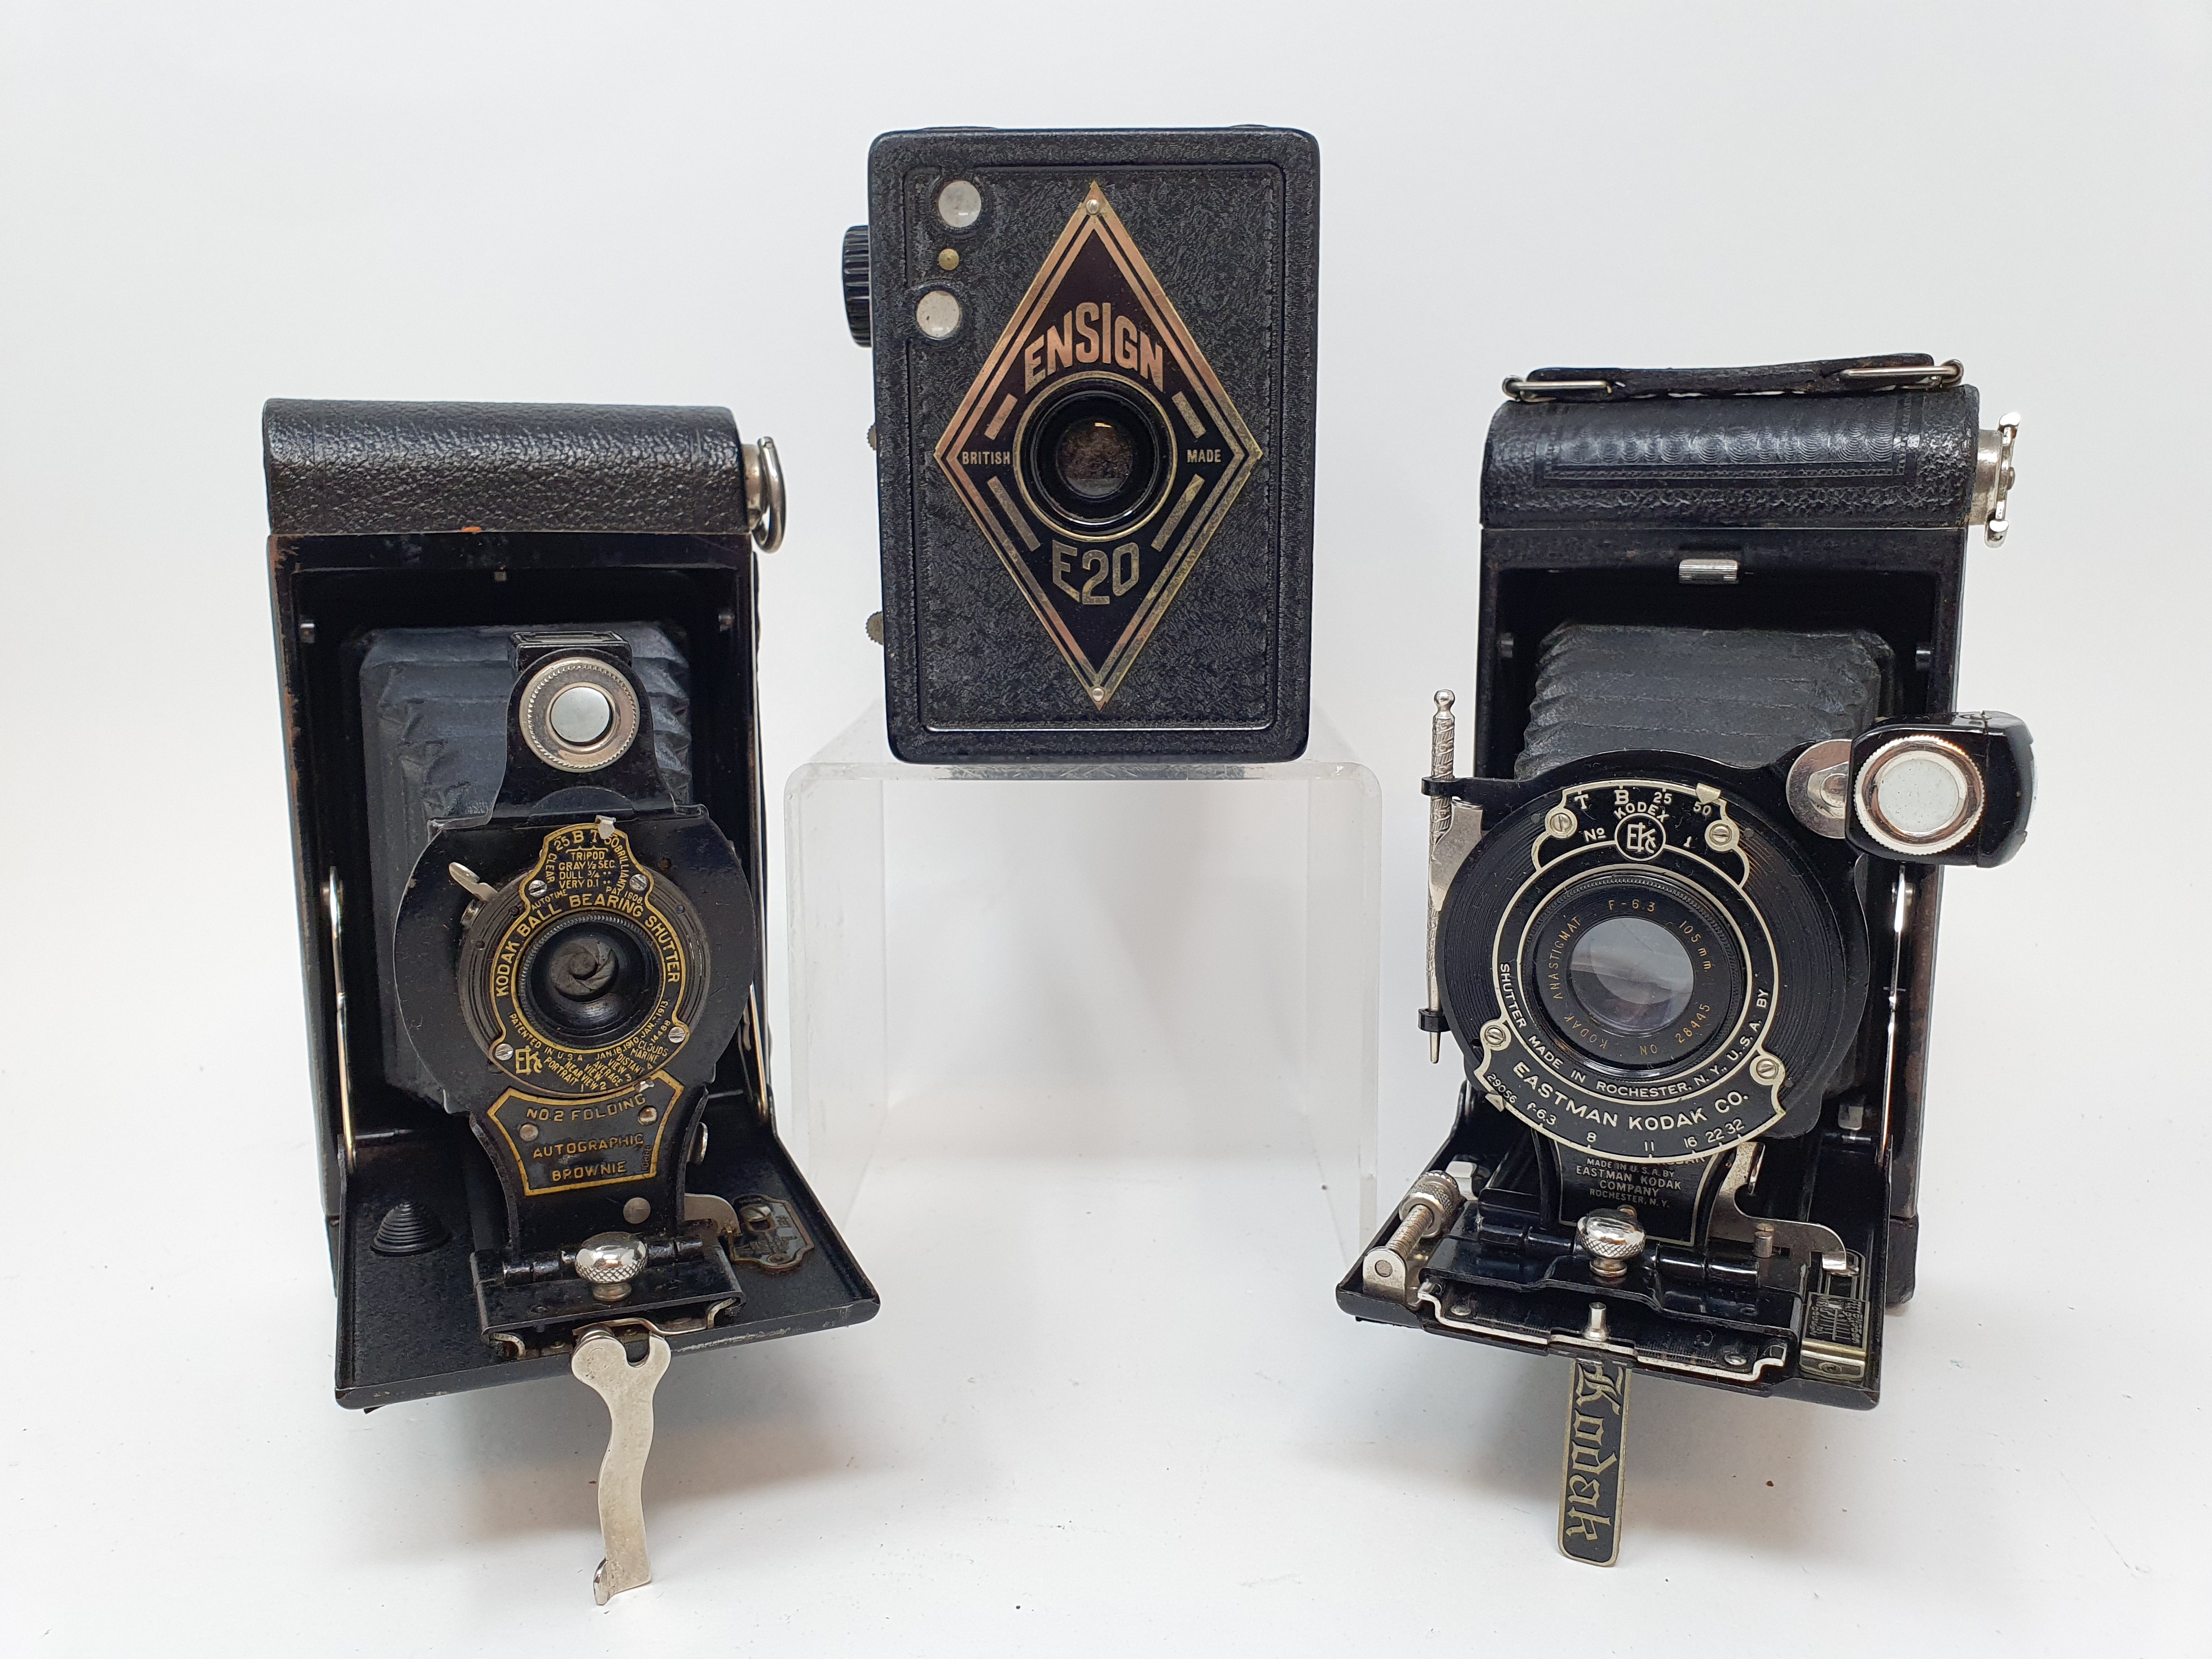 A Kodak Autographic Brownie folding camera, with canvas case, a Kodak No. 1 folding camera, and an